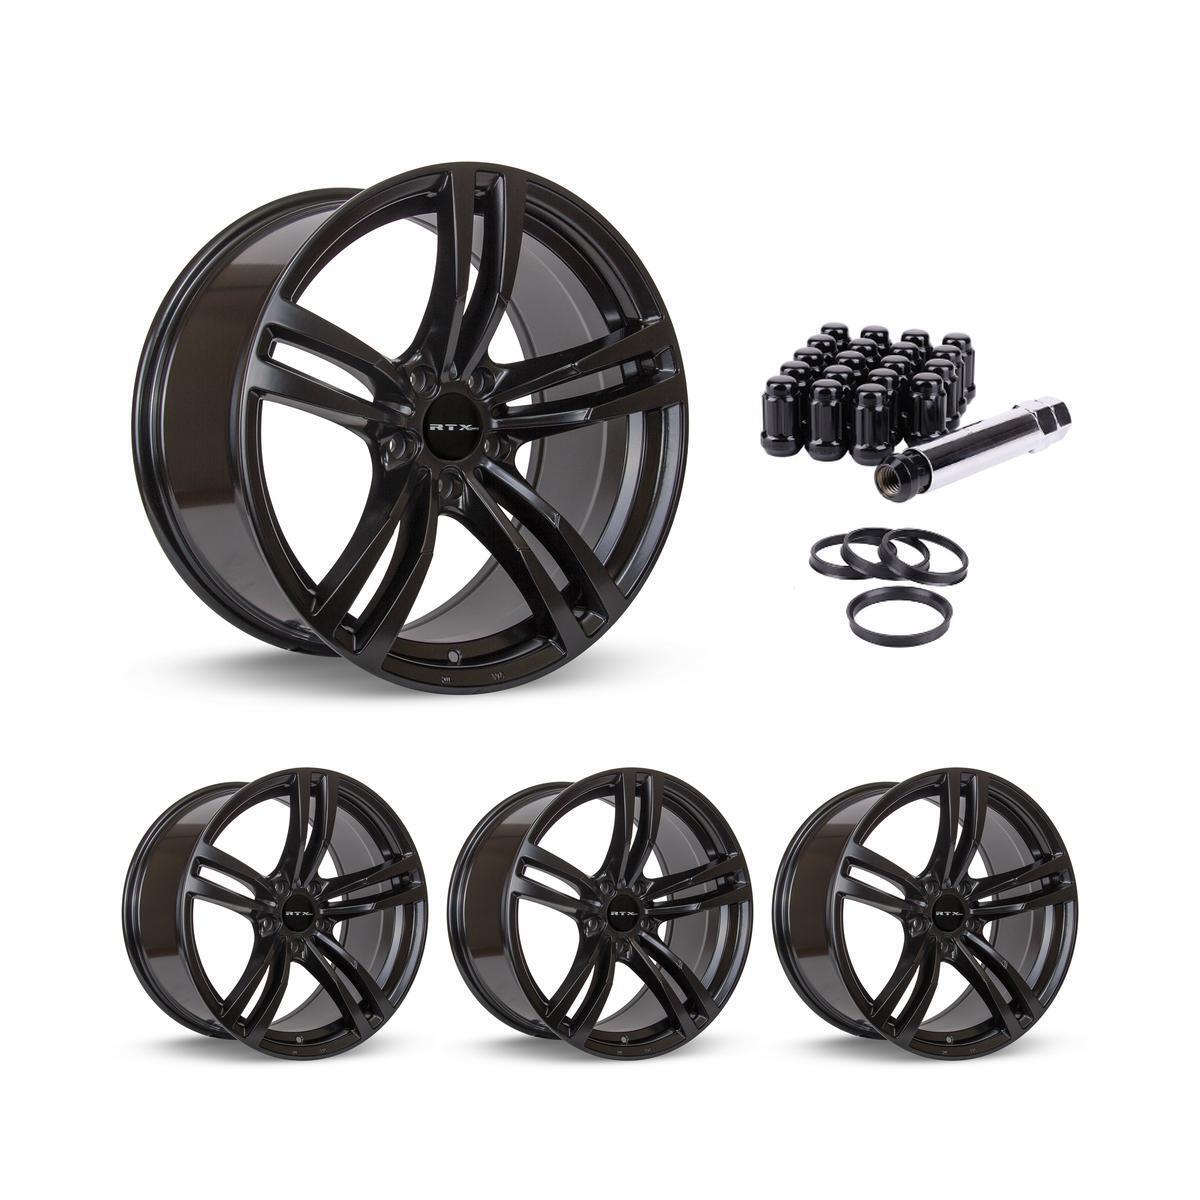 Wheel Rims Set with Black Lug Nuts Kit for 00 BMW 328Ci P829198 18 inch